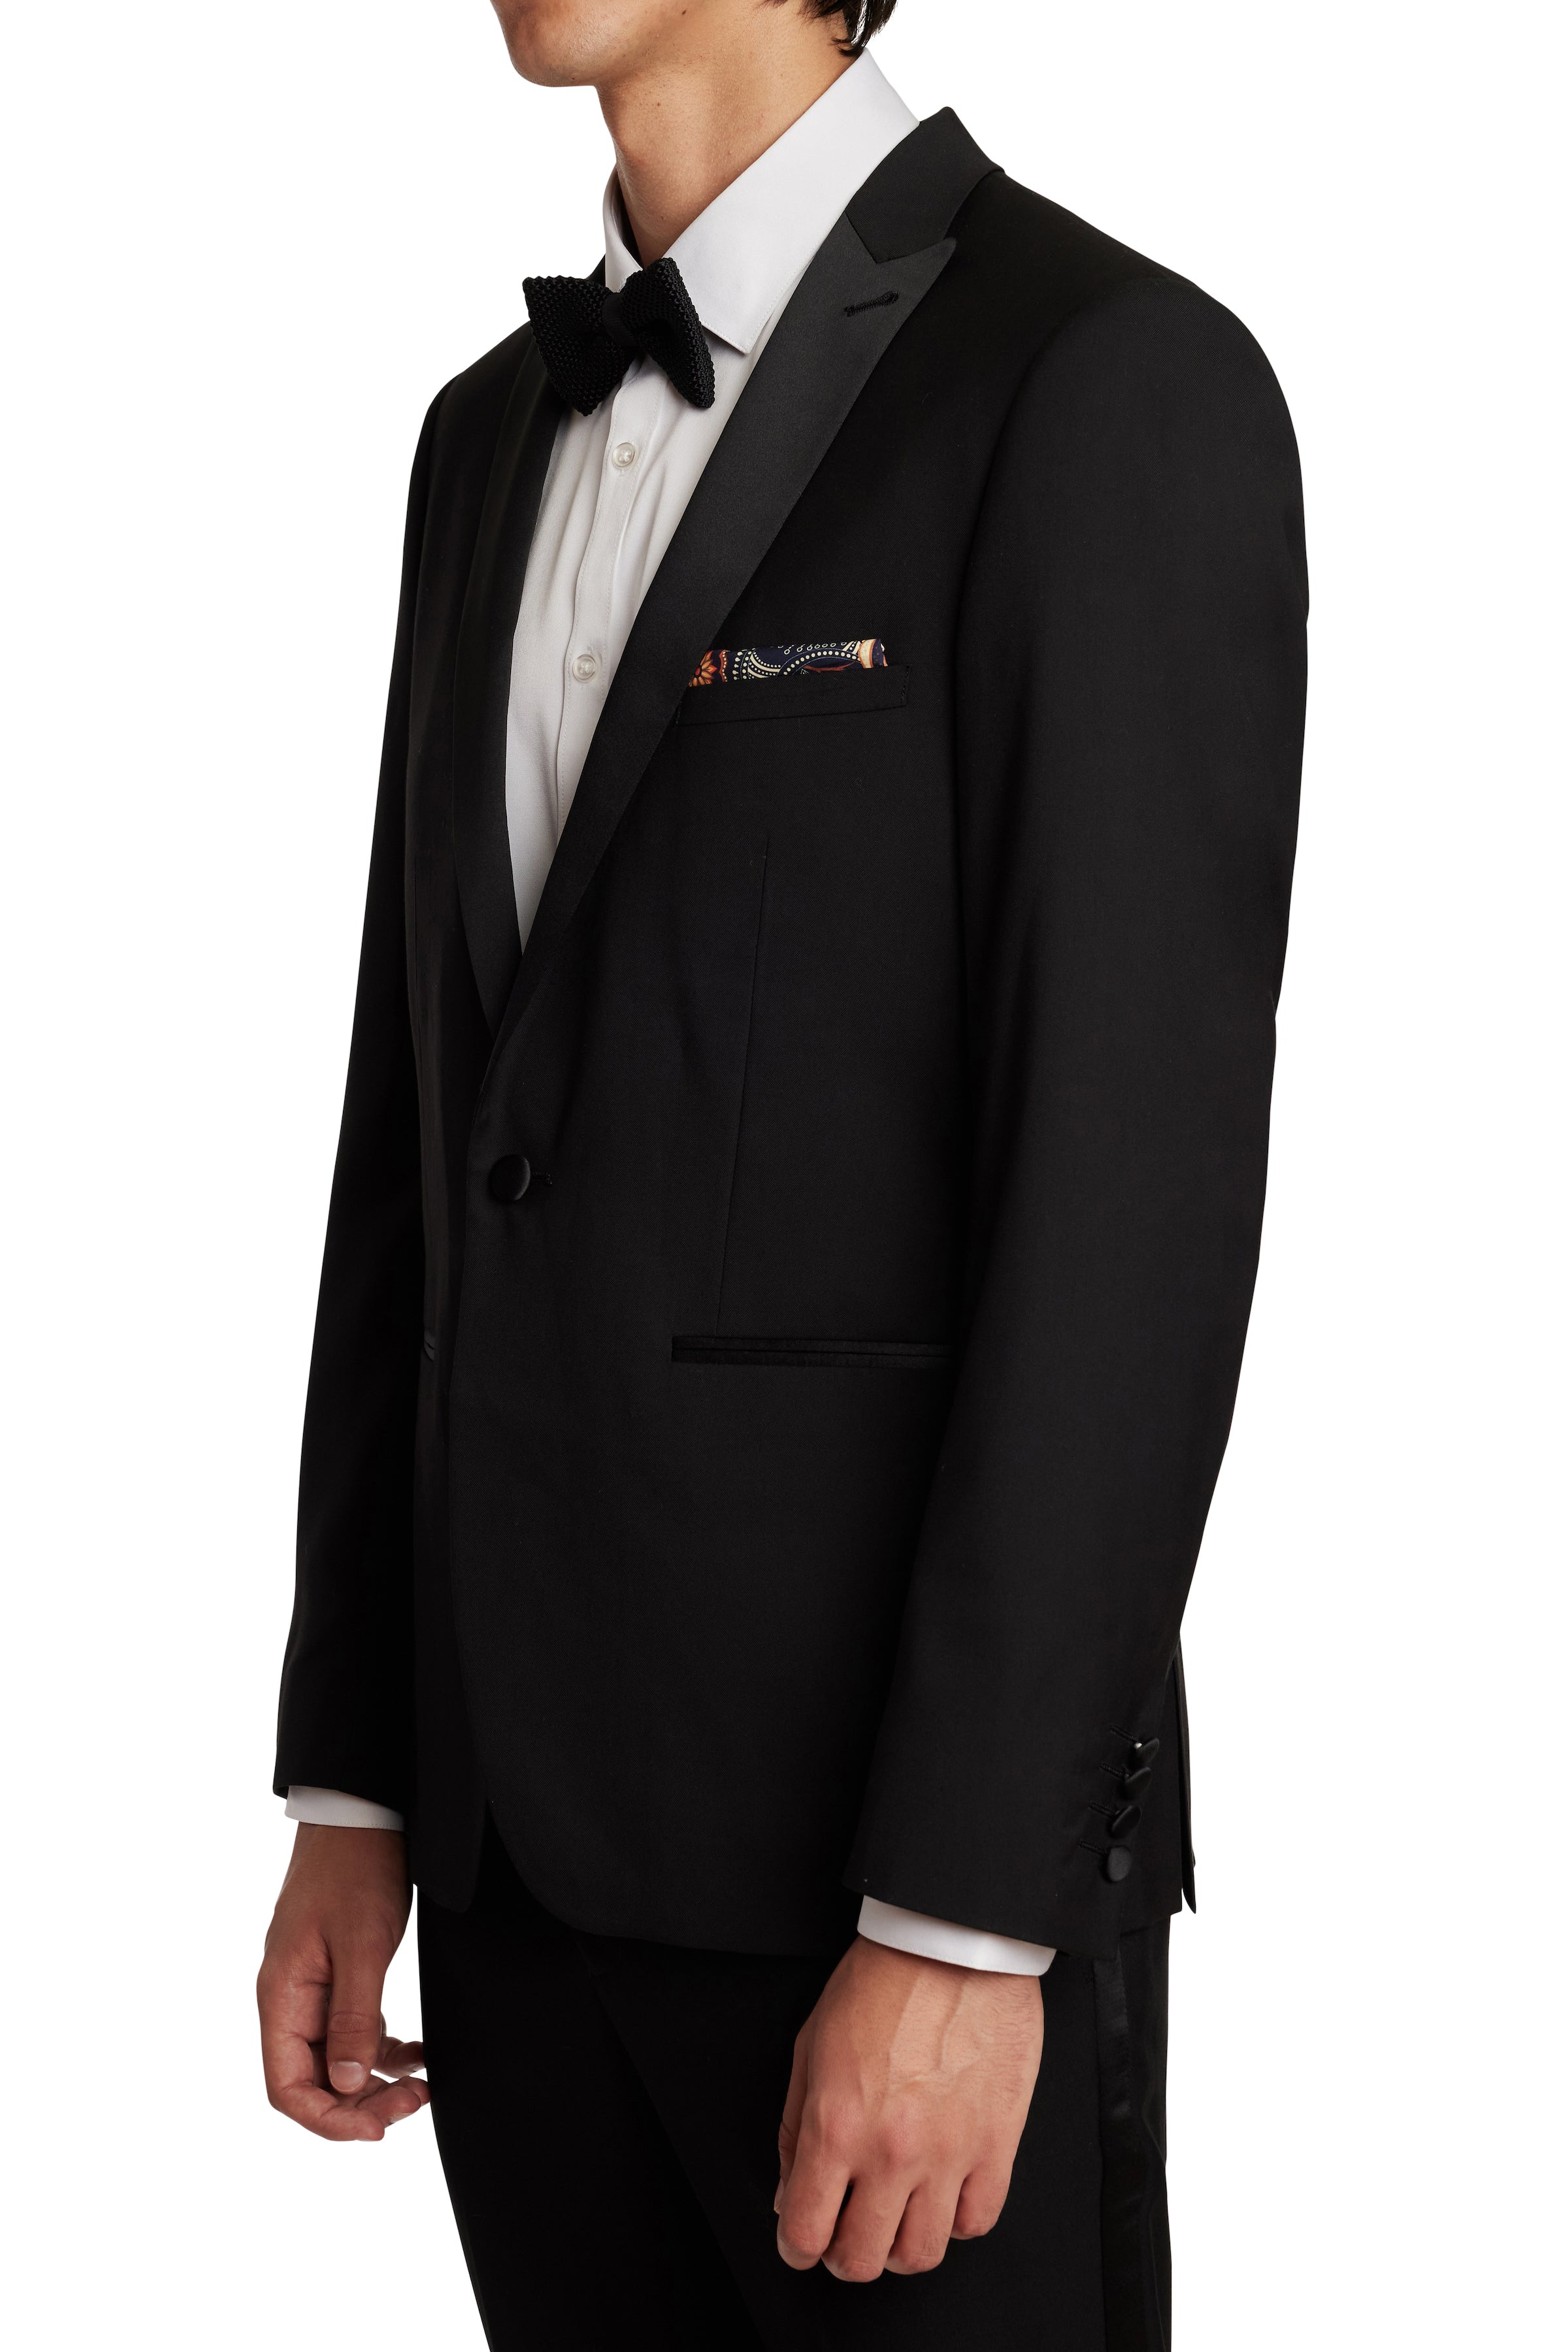 Grosvenor Peak Tuxedo Jacket - Slim - Classic Black